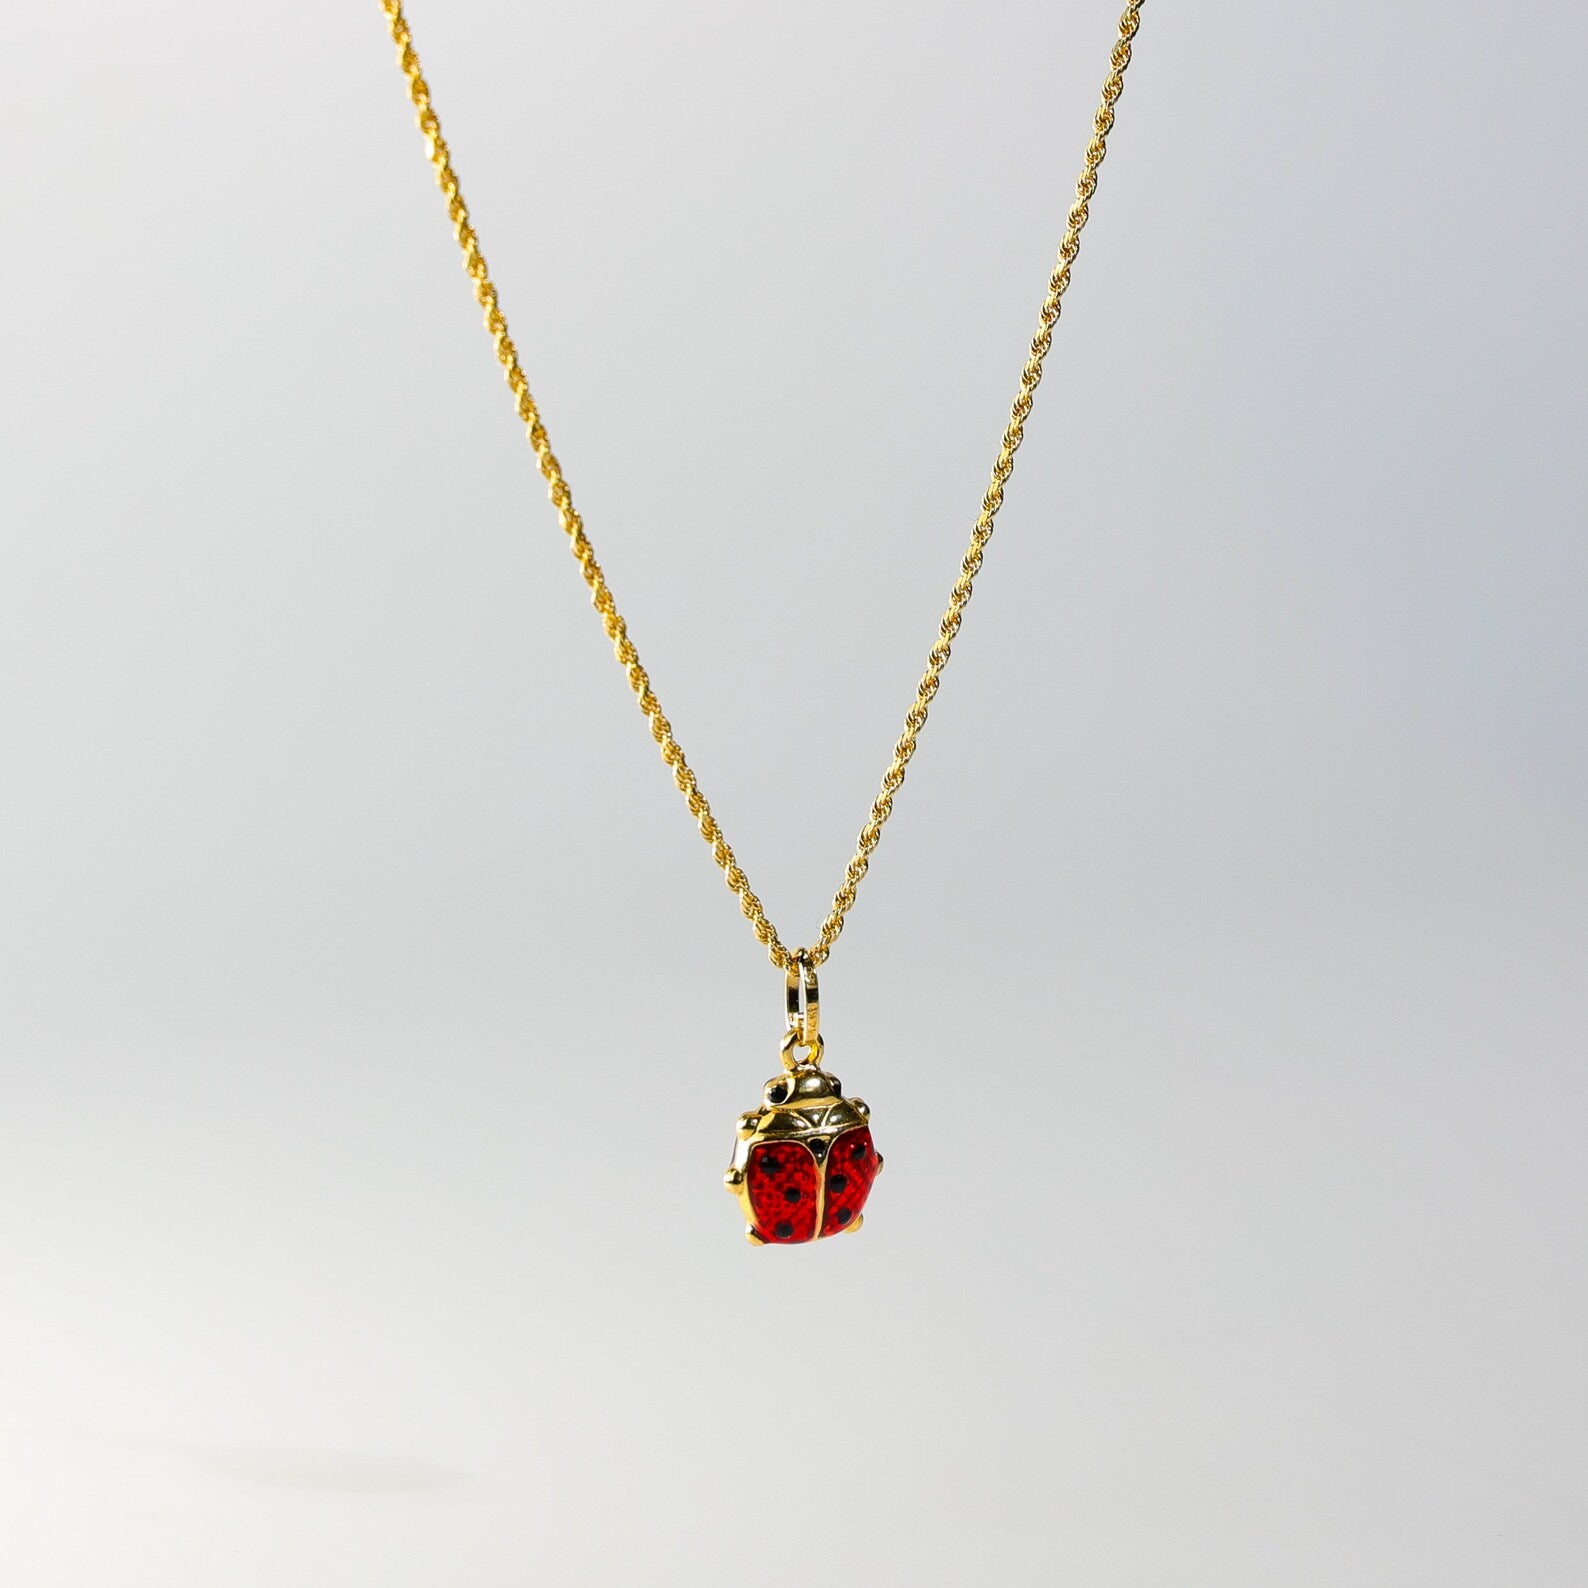 Adorable Ladybug Gold Pendant - Charlie & Co. Jewelry